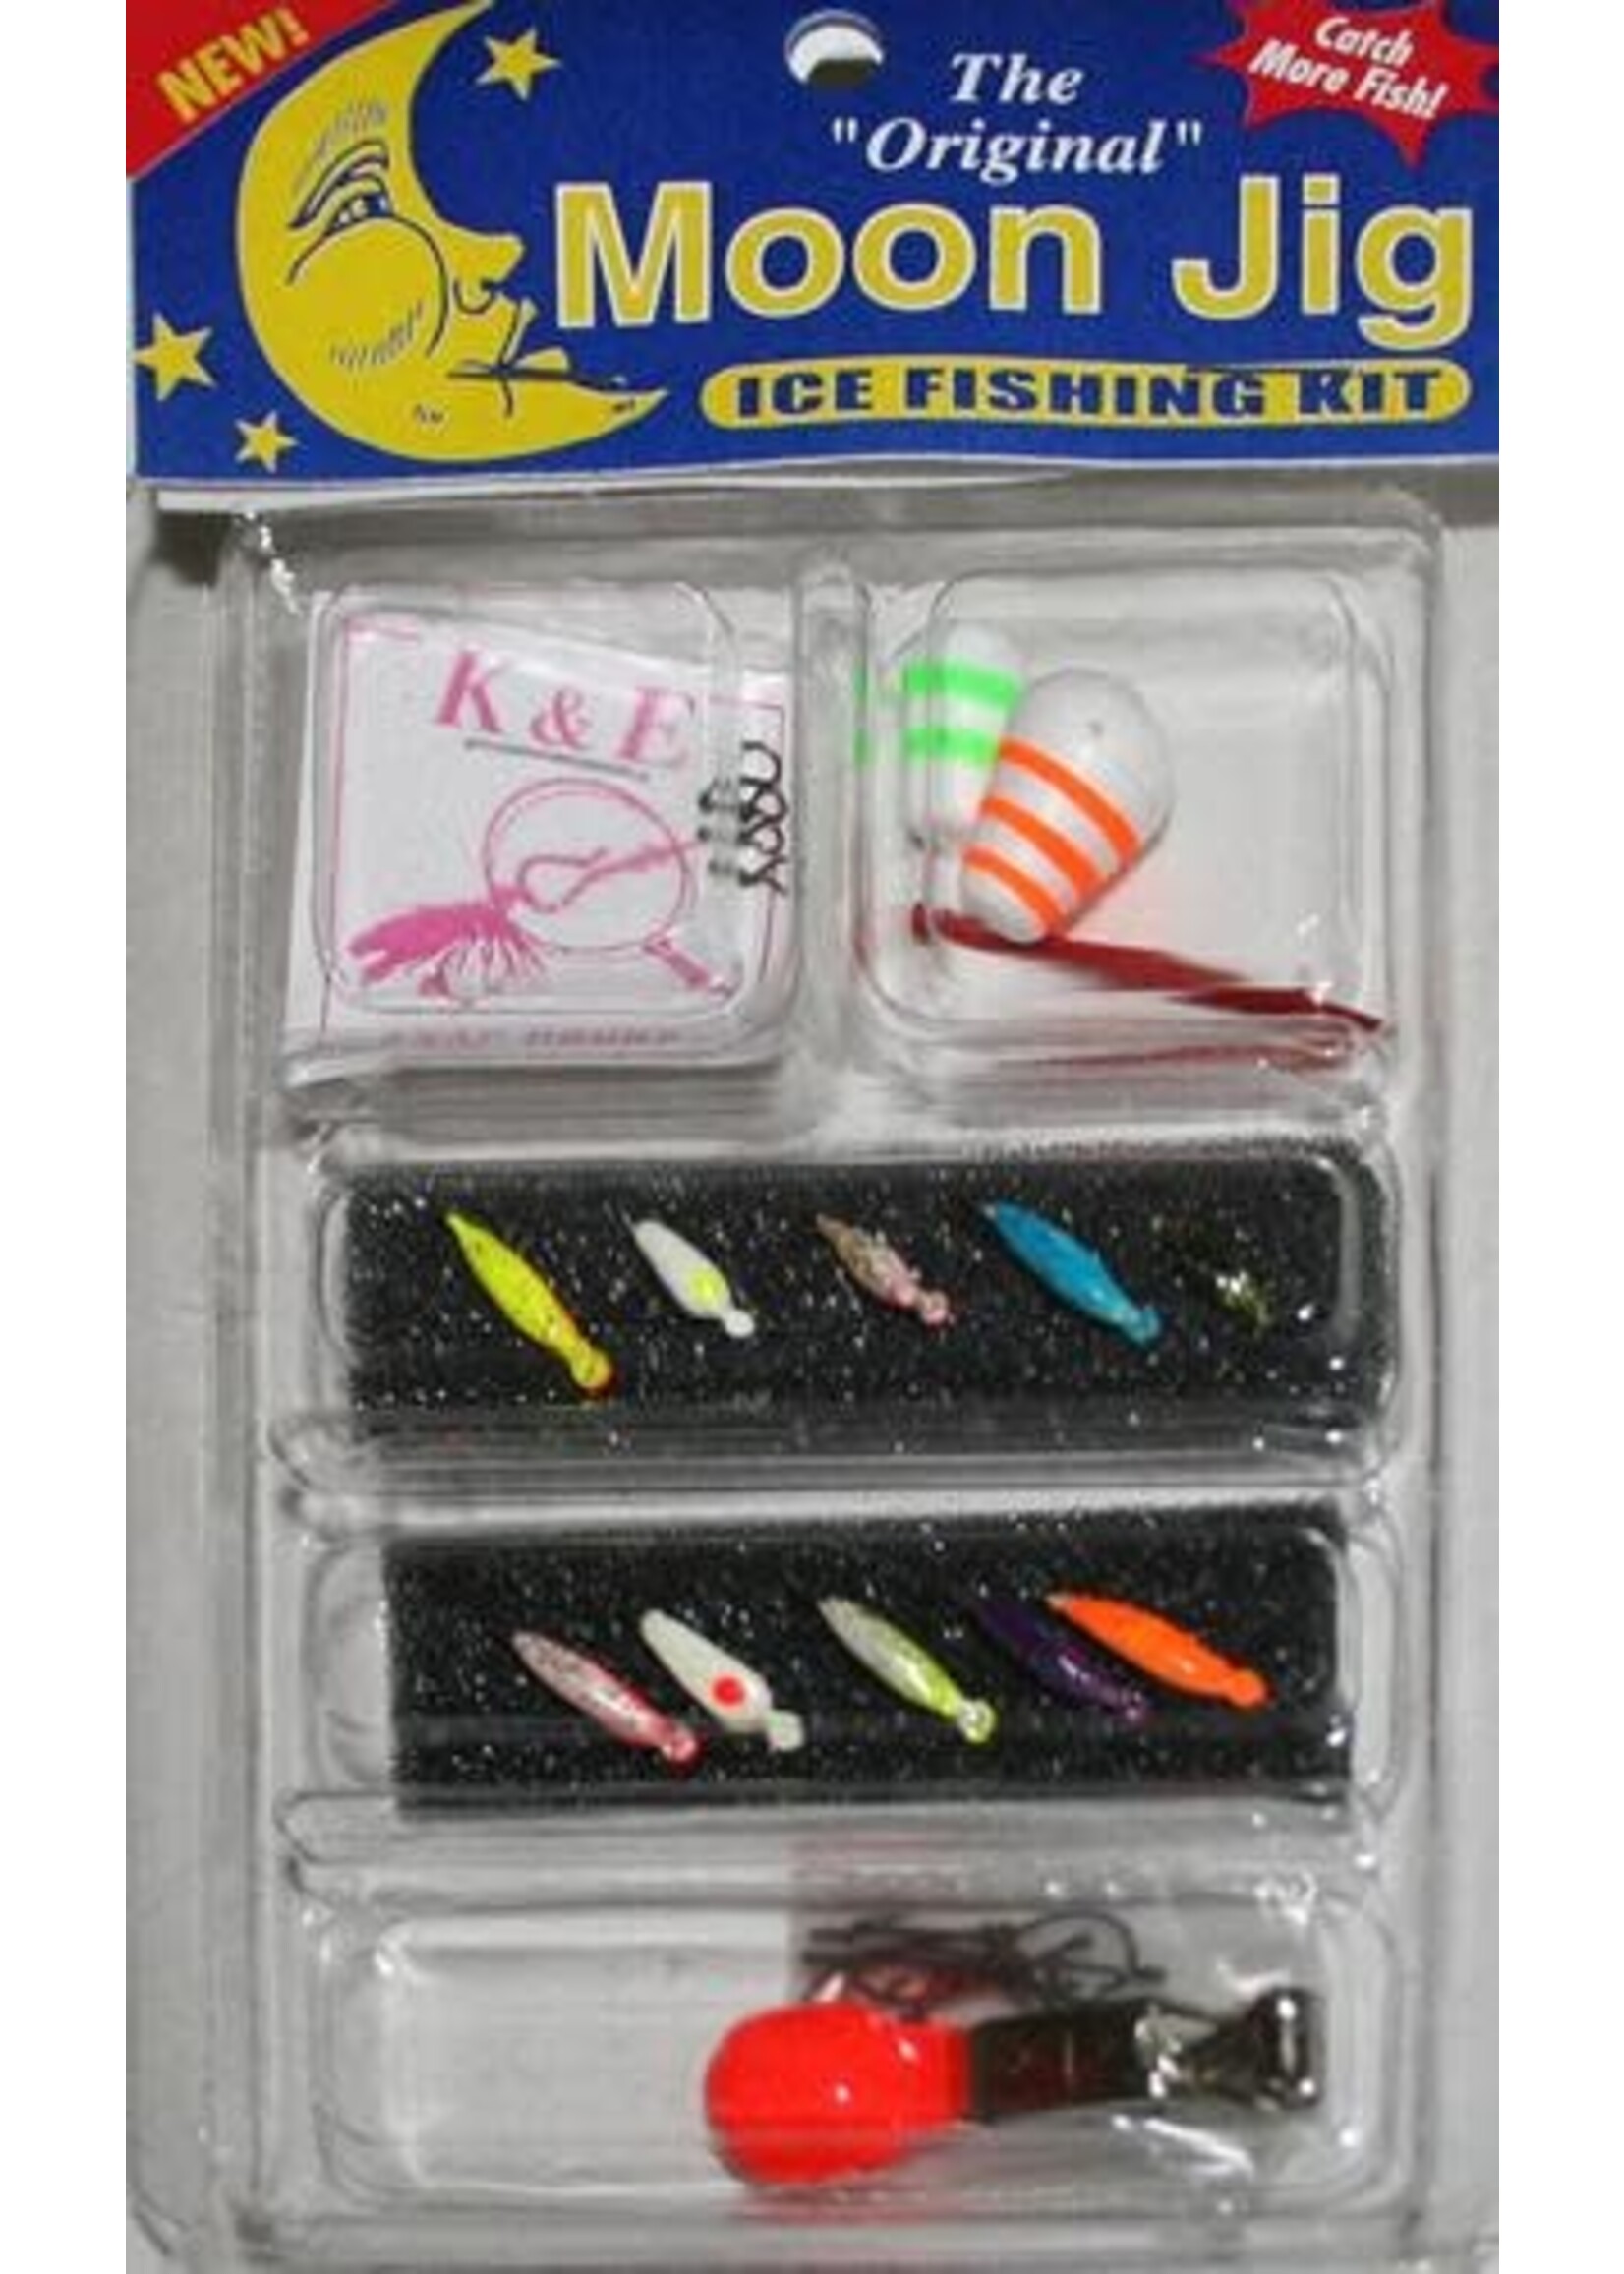 K&E Tackle K&E Tackle Moon Jig Ice Fishing Kit